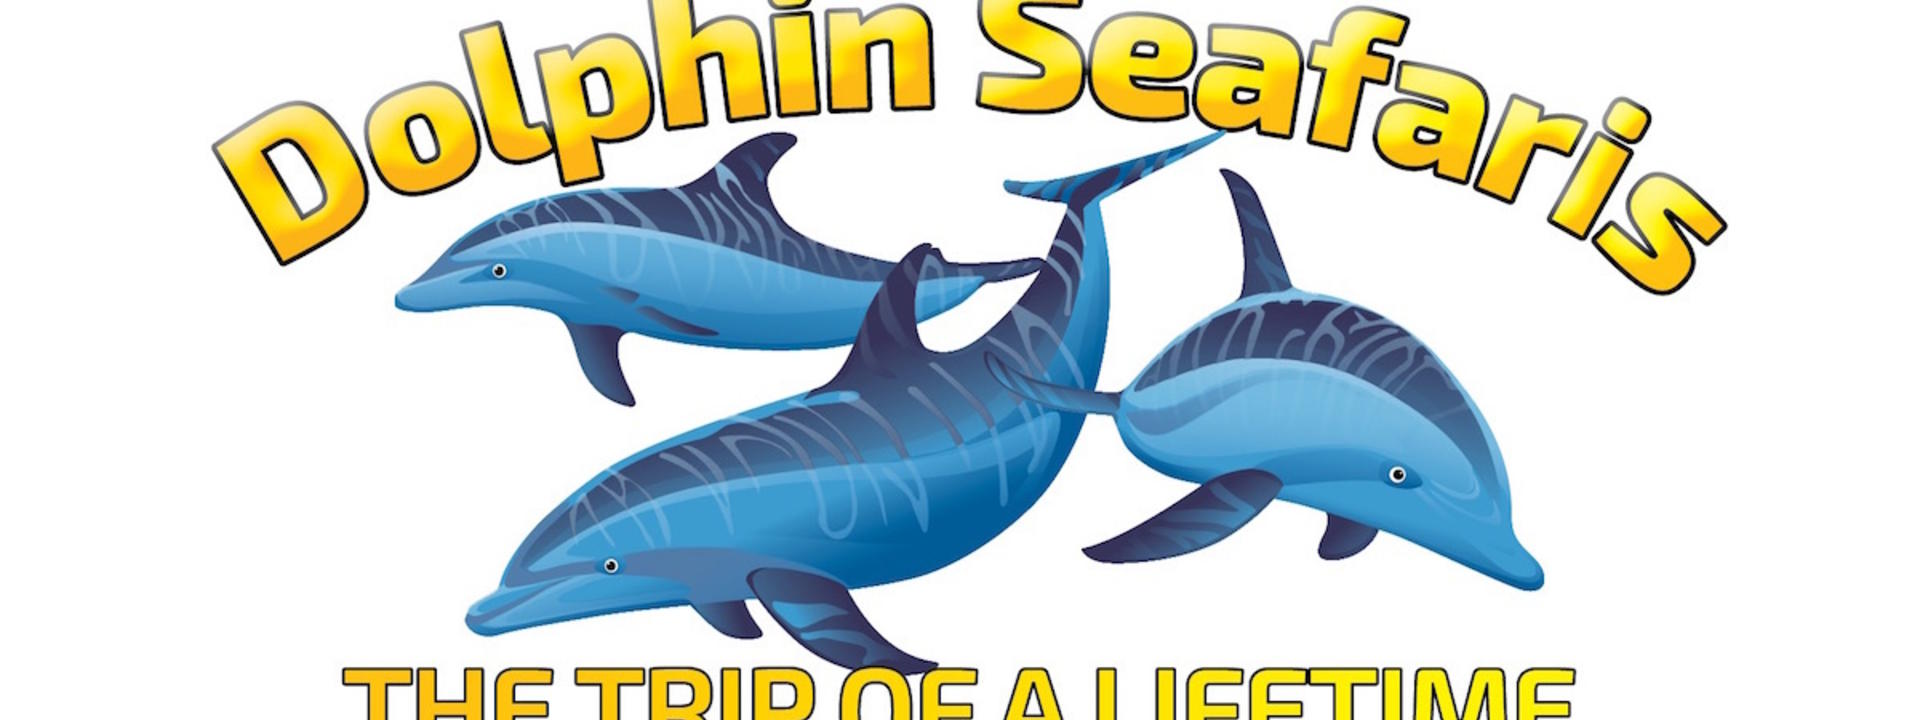 Logo: Dolphin Seafaris NZ Ltd.